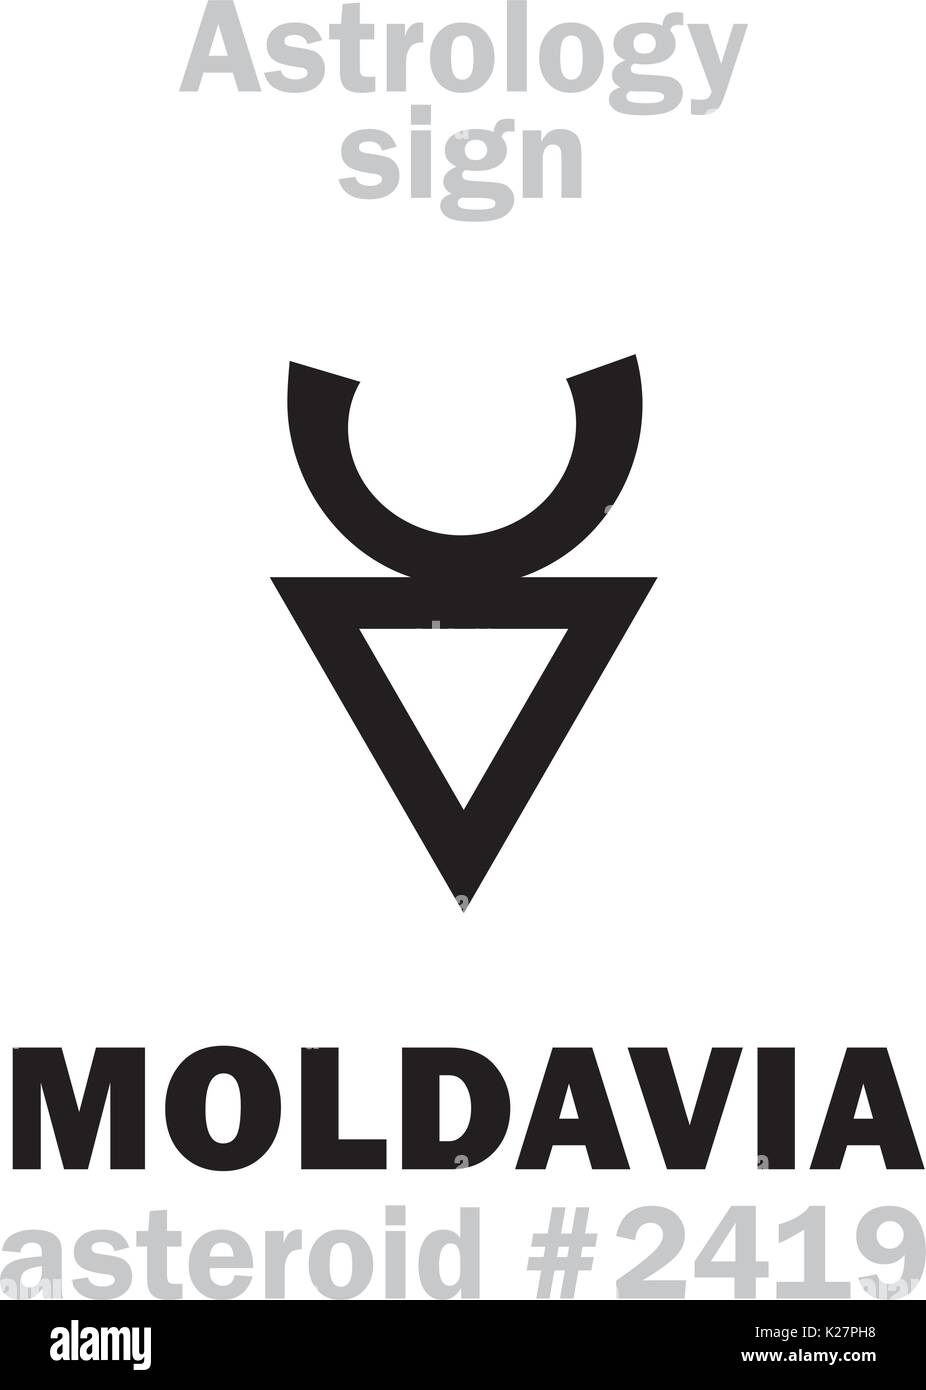 Astrology Alphabet: MOLDAVIA, asteroid #2419. Hieroglyphics character sign (single symbol). Stock Vector